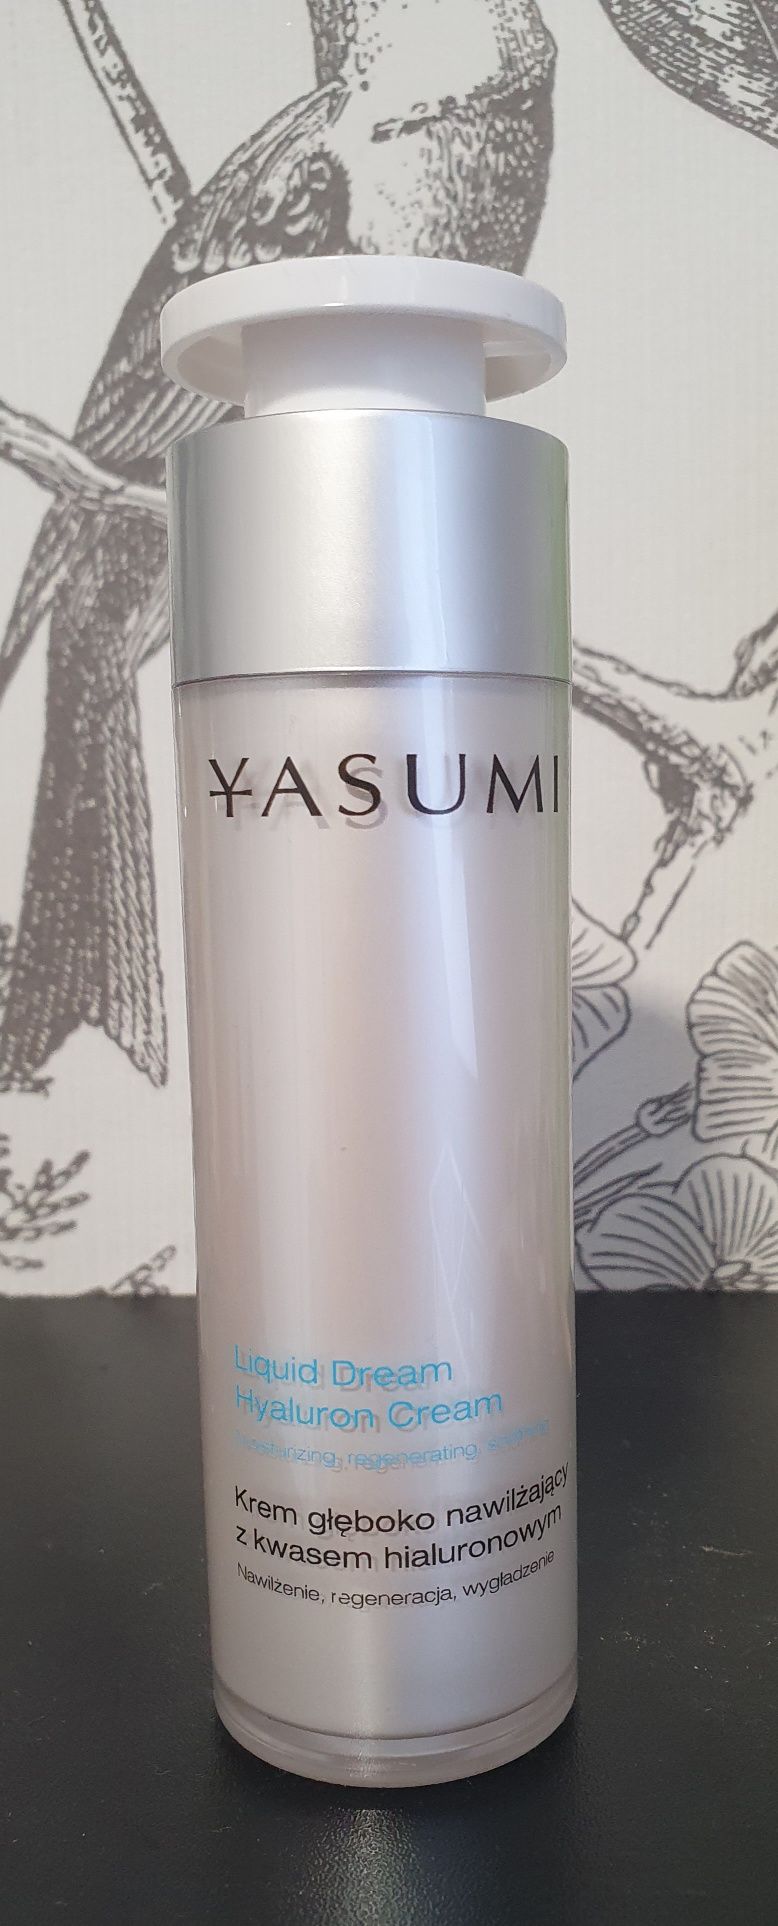 Yasumi liquid dream hyaluron cream